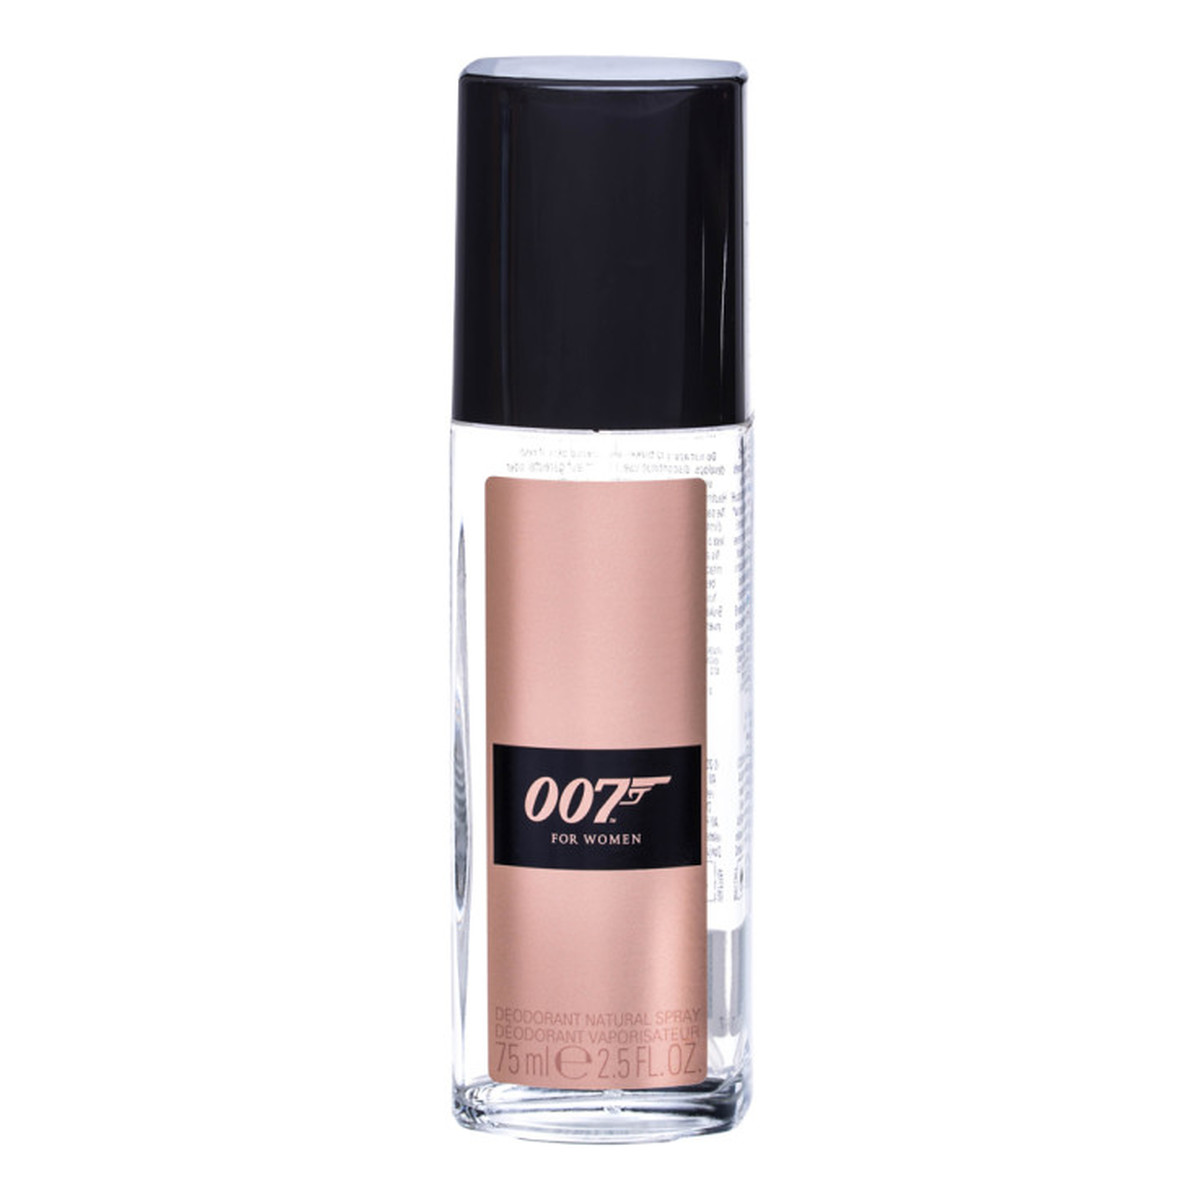 James Bond 007 Quantum dezodorant z atomizerem 75ml